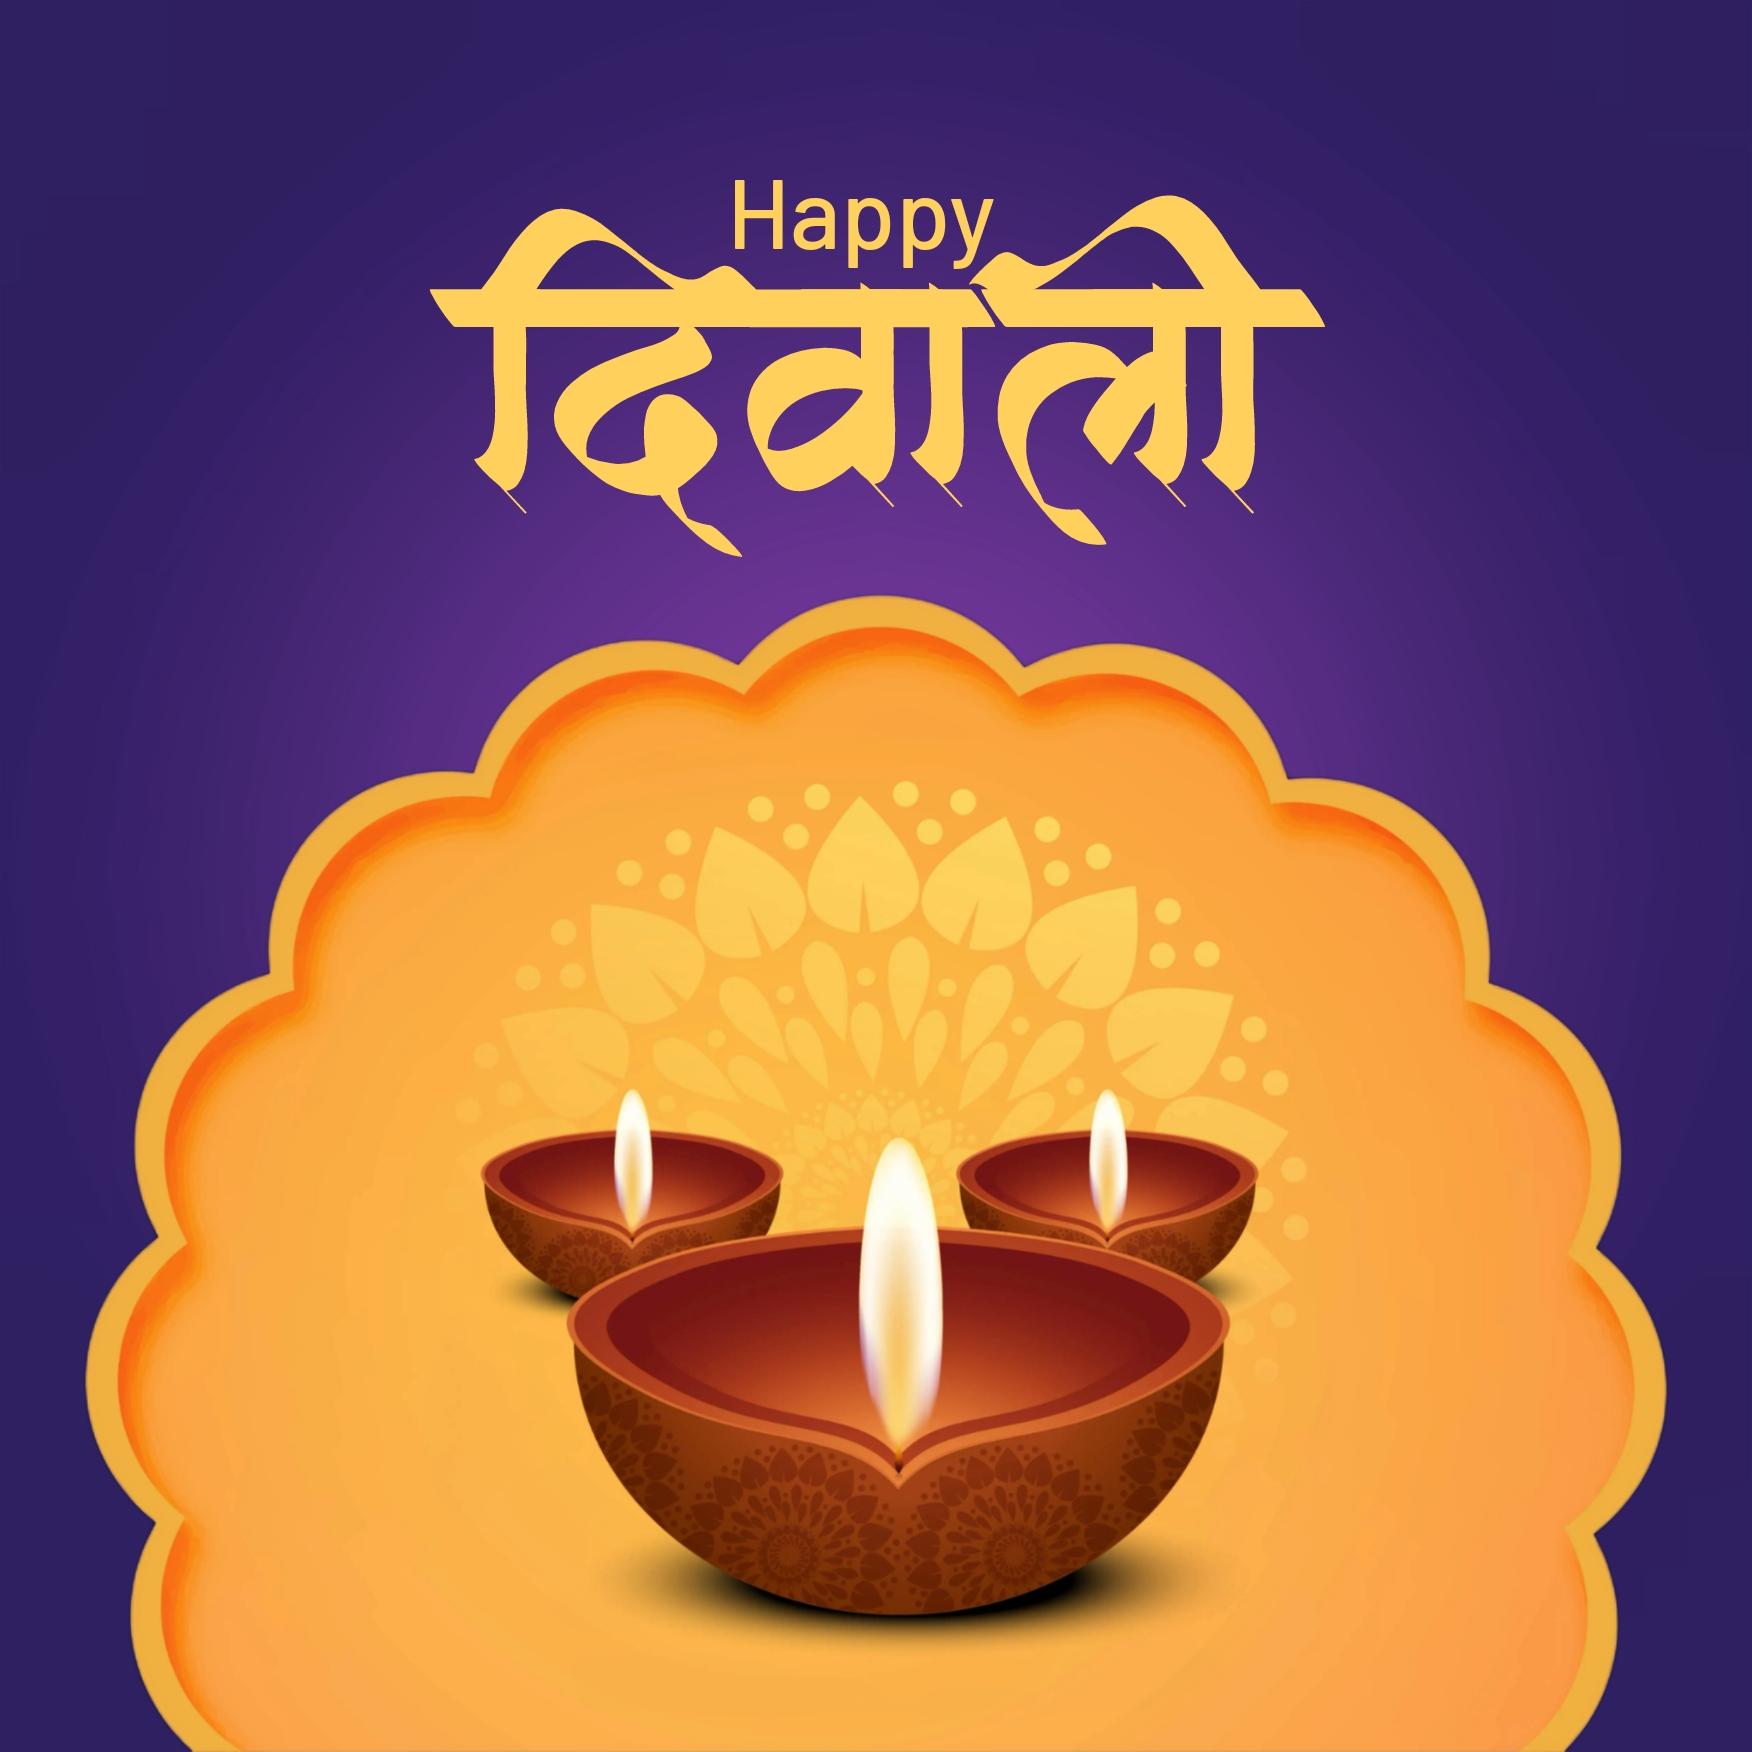 Happy Diwali Images in Hindi HD Download